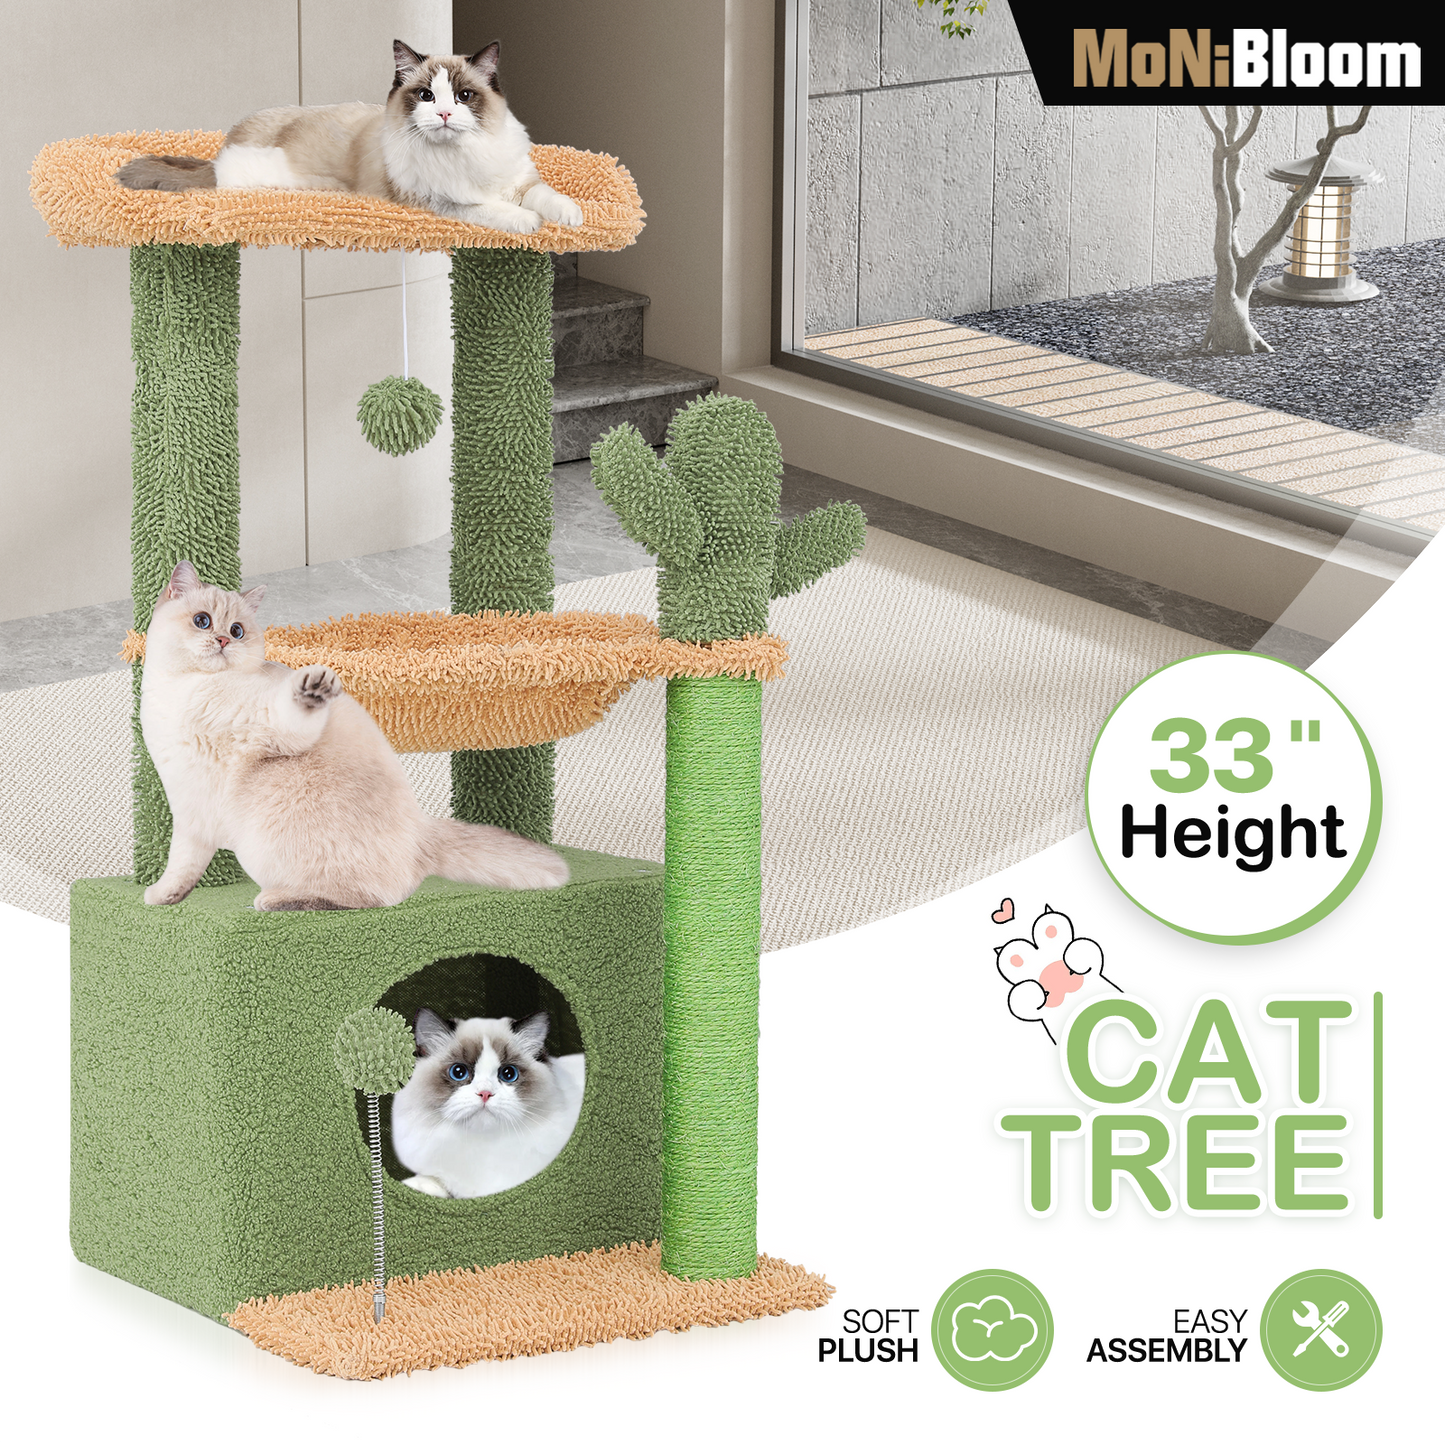 33.5" Height Cat Tree - Cactus Design - Green/Light Brown